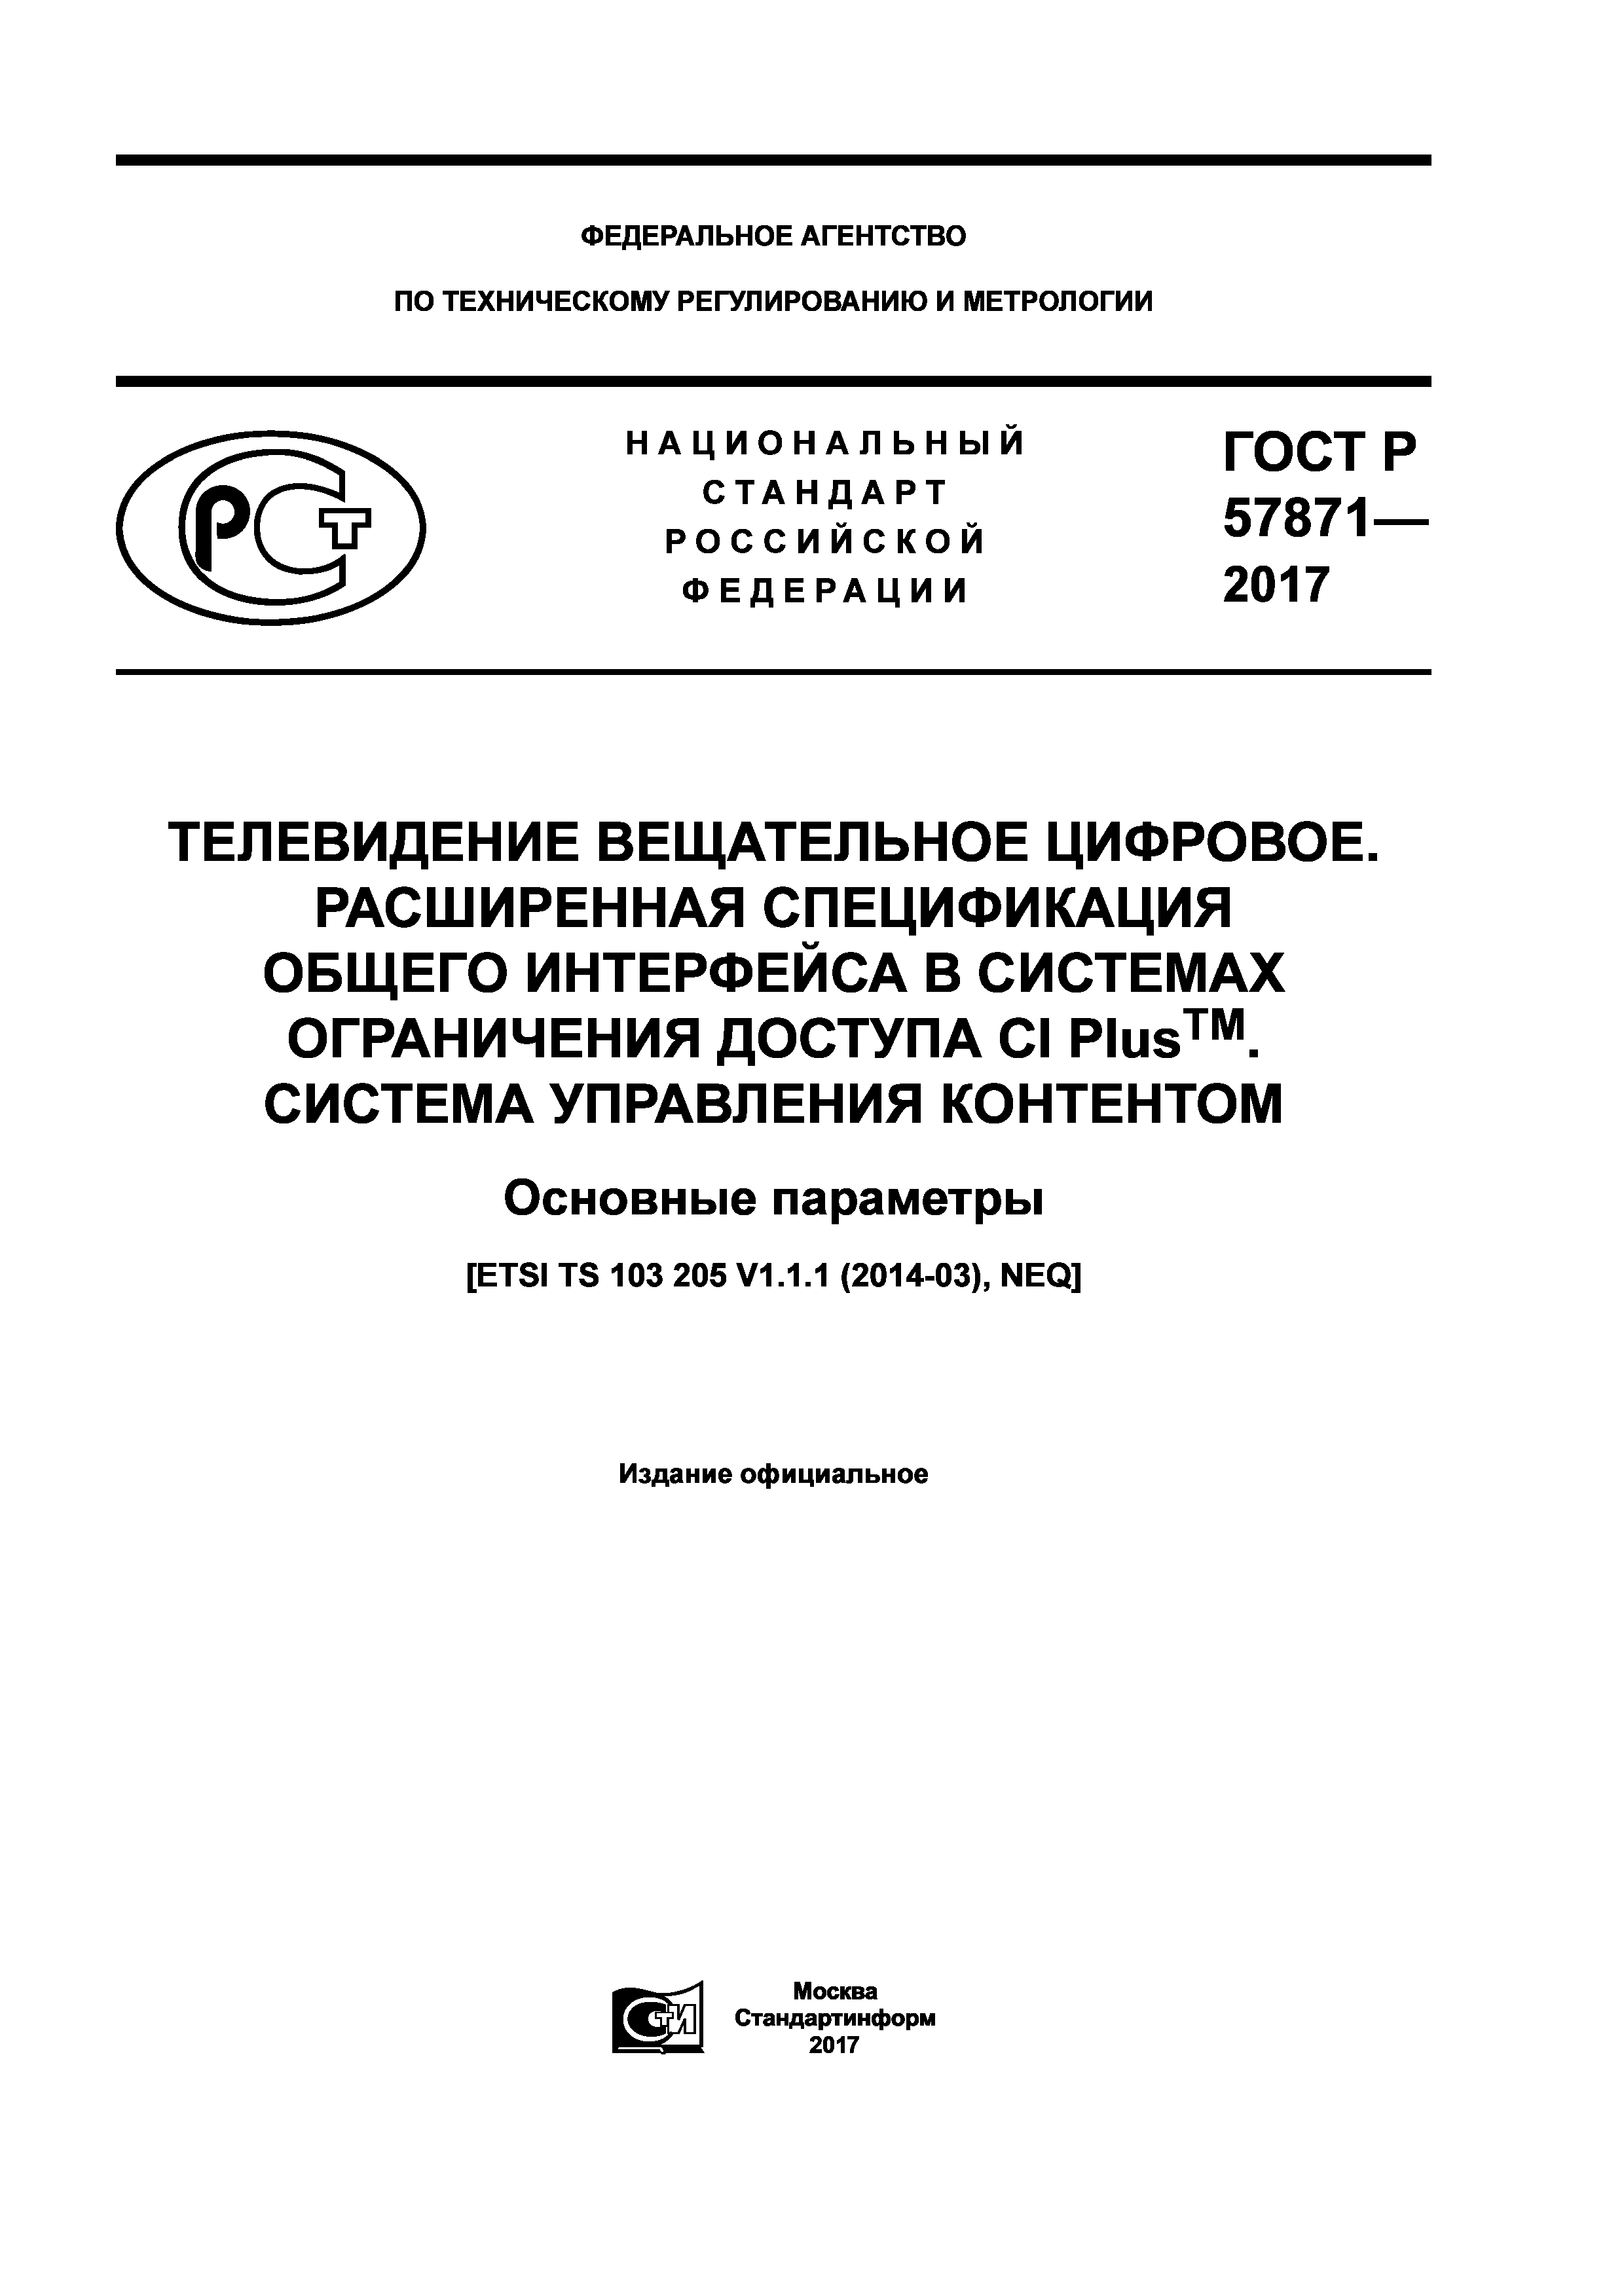 ГОСТ Р 57871-2017